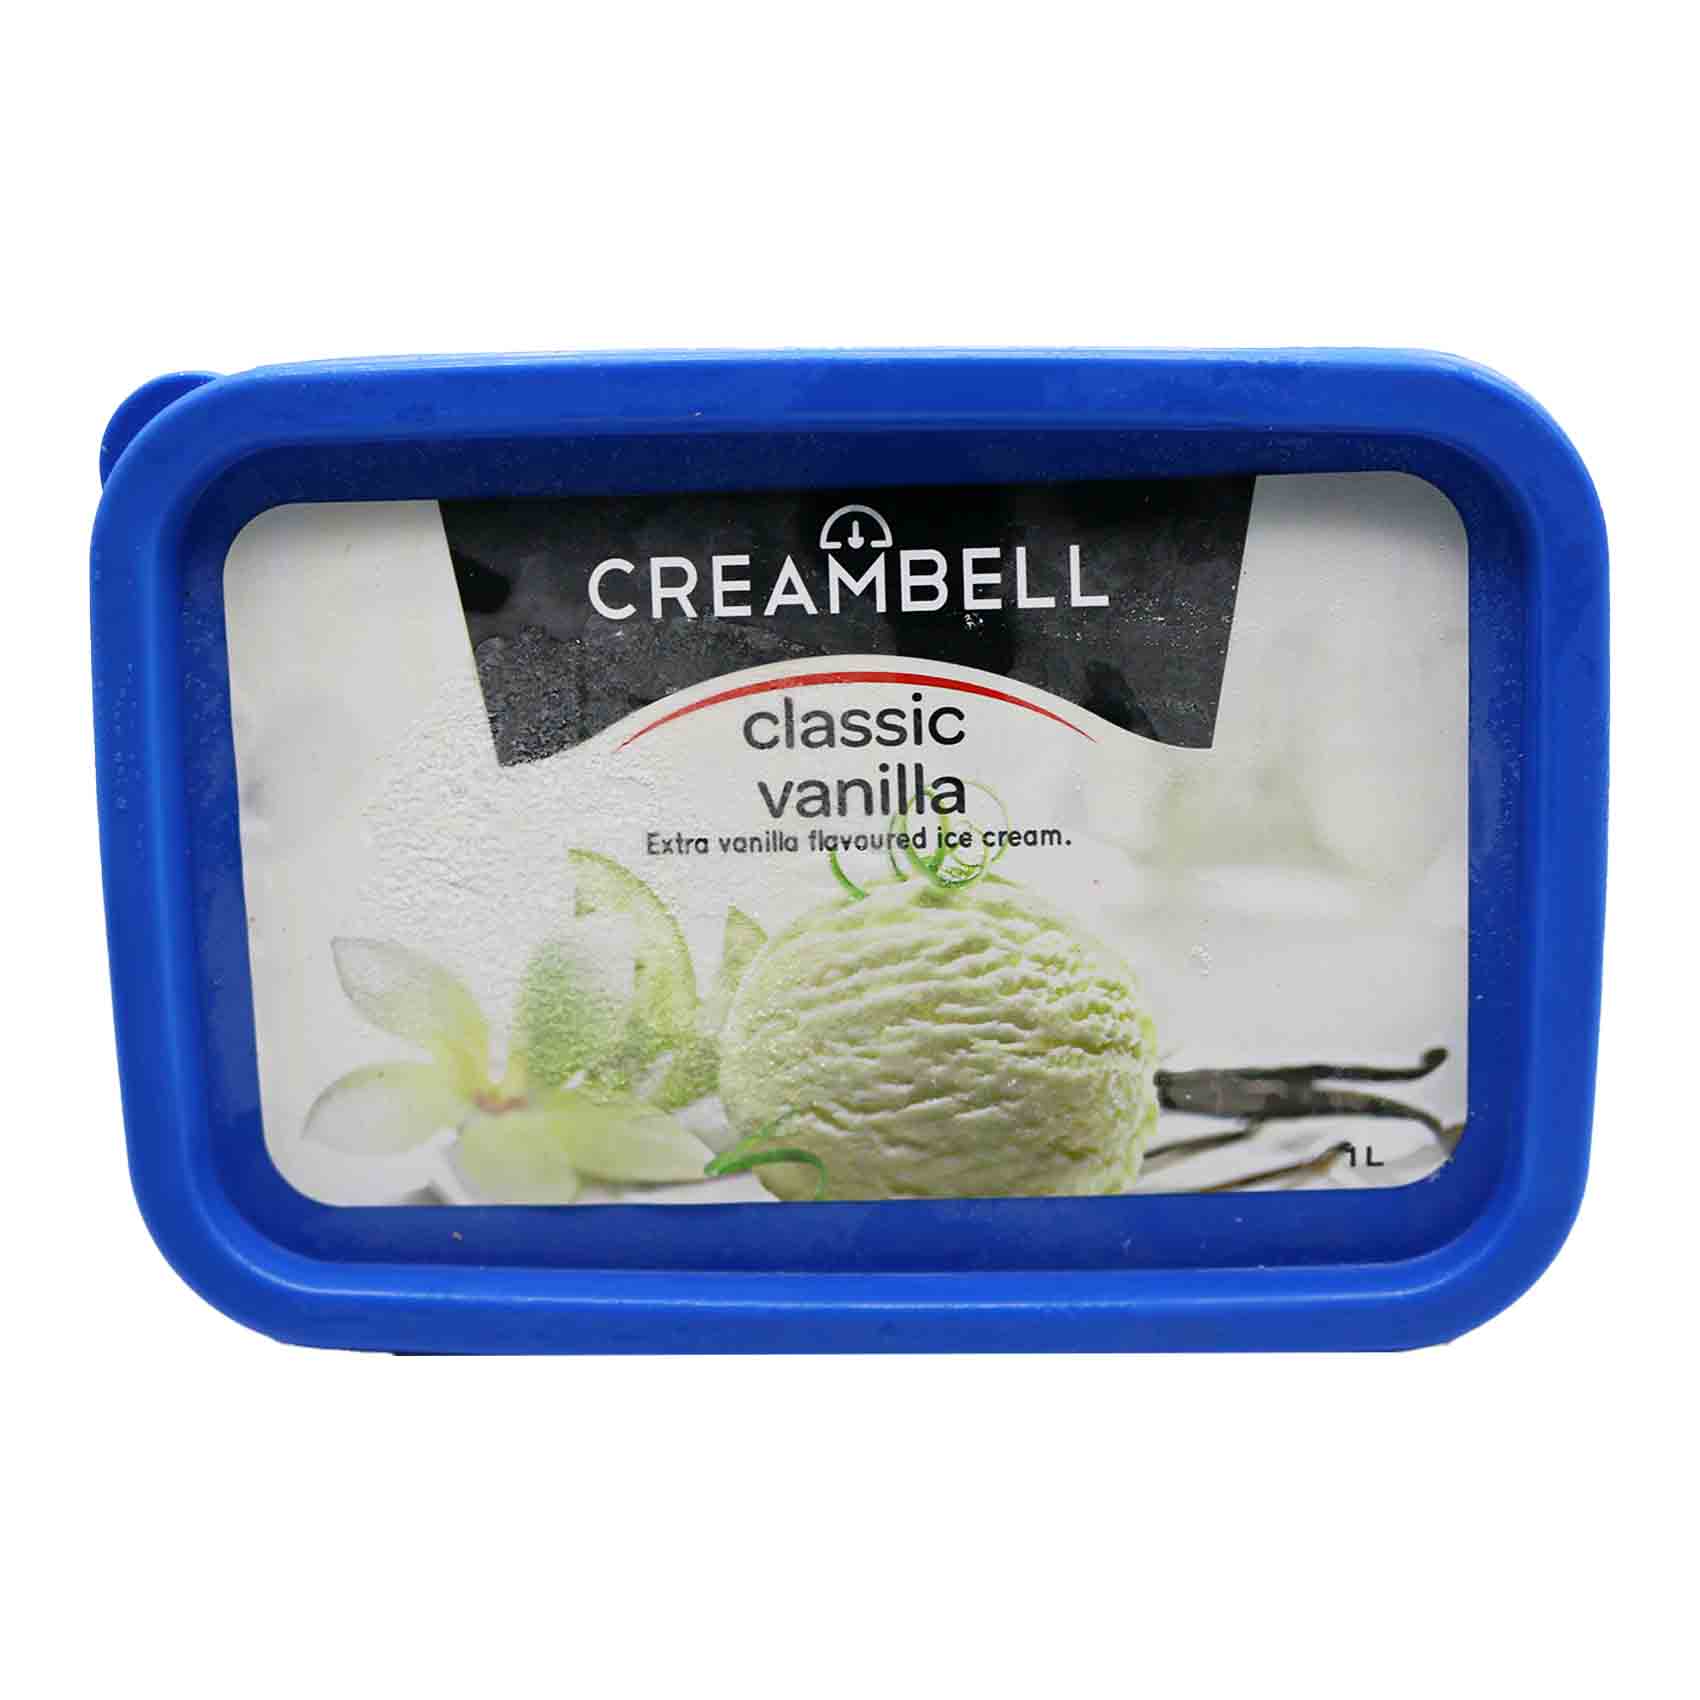 Creambell Classic Vanilla Ice Cream 1L